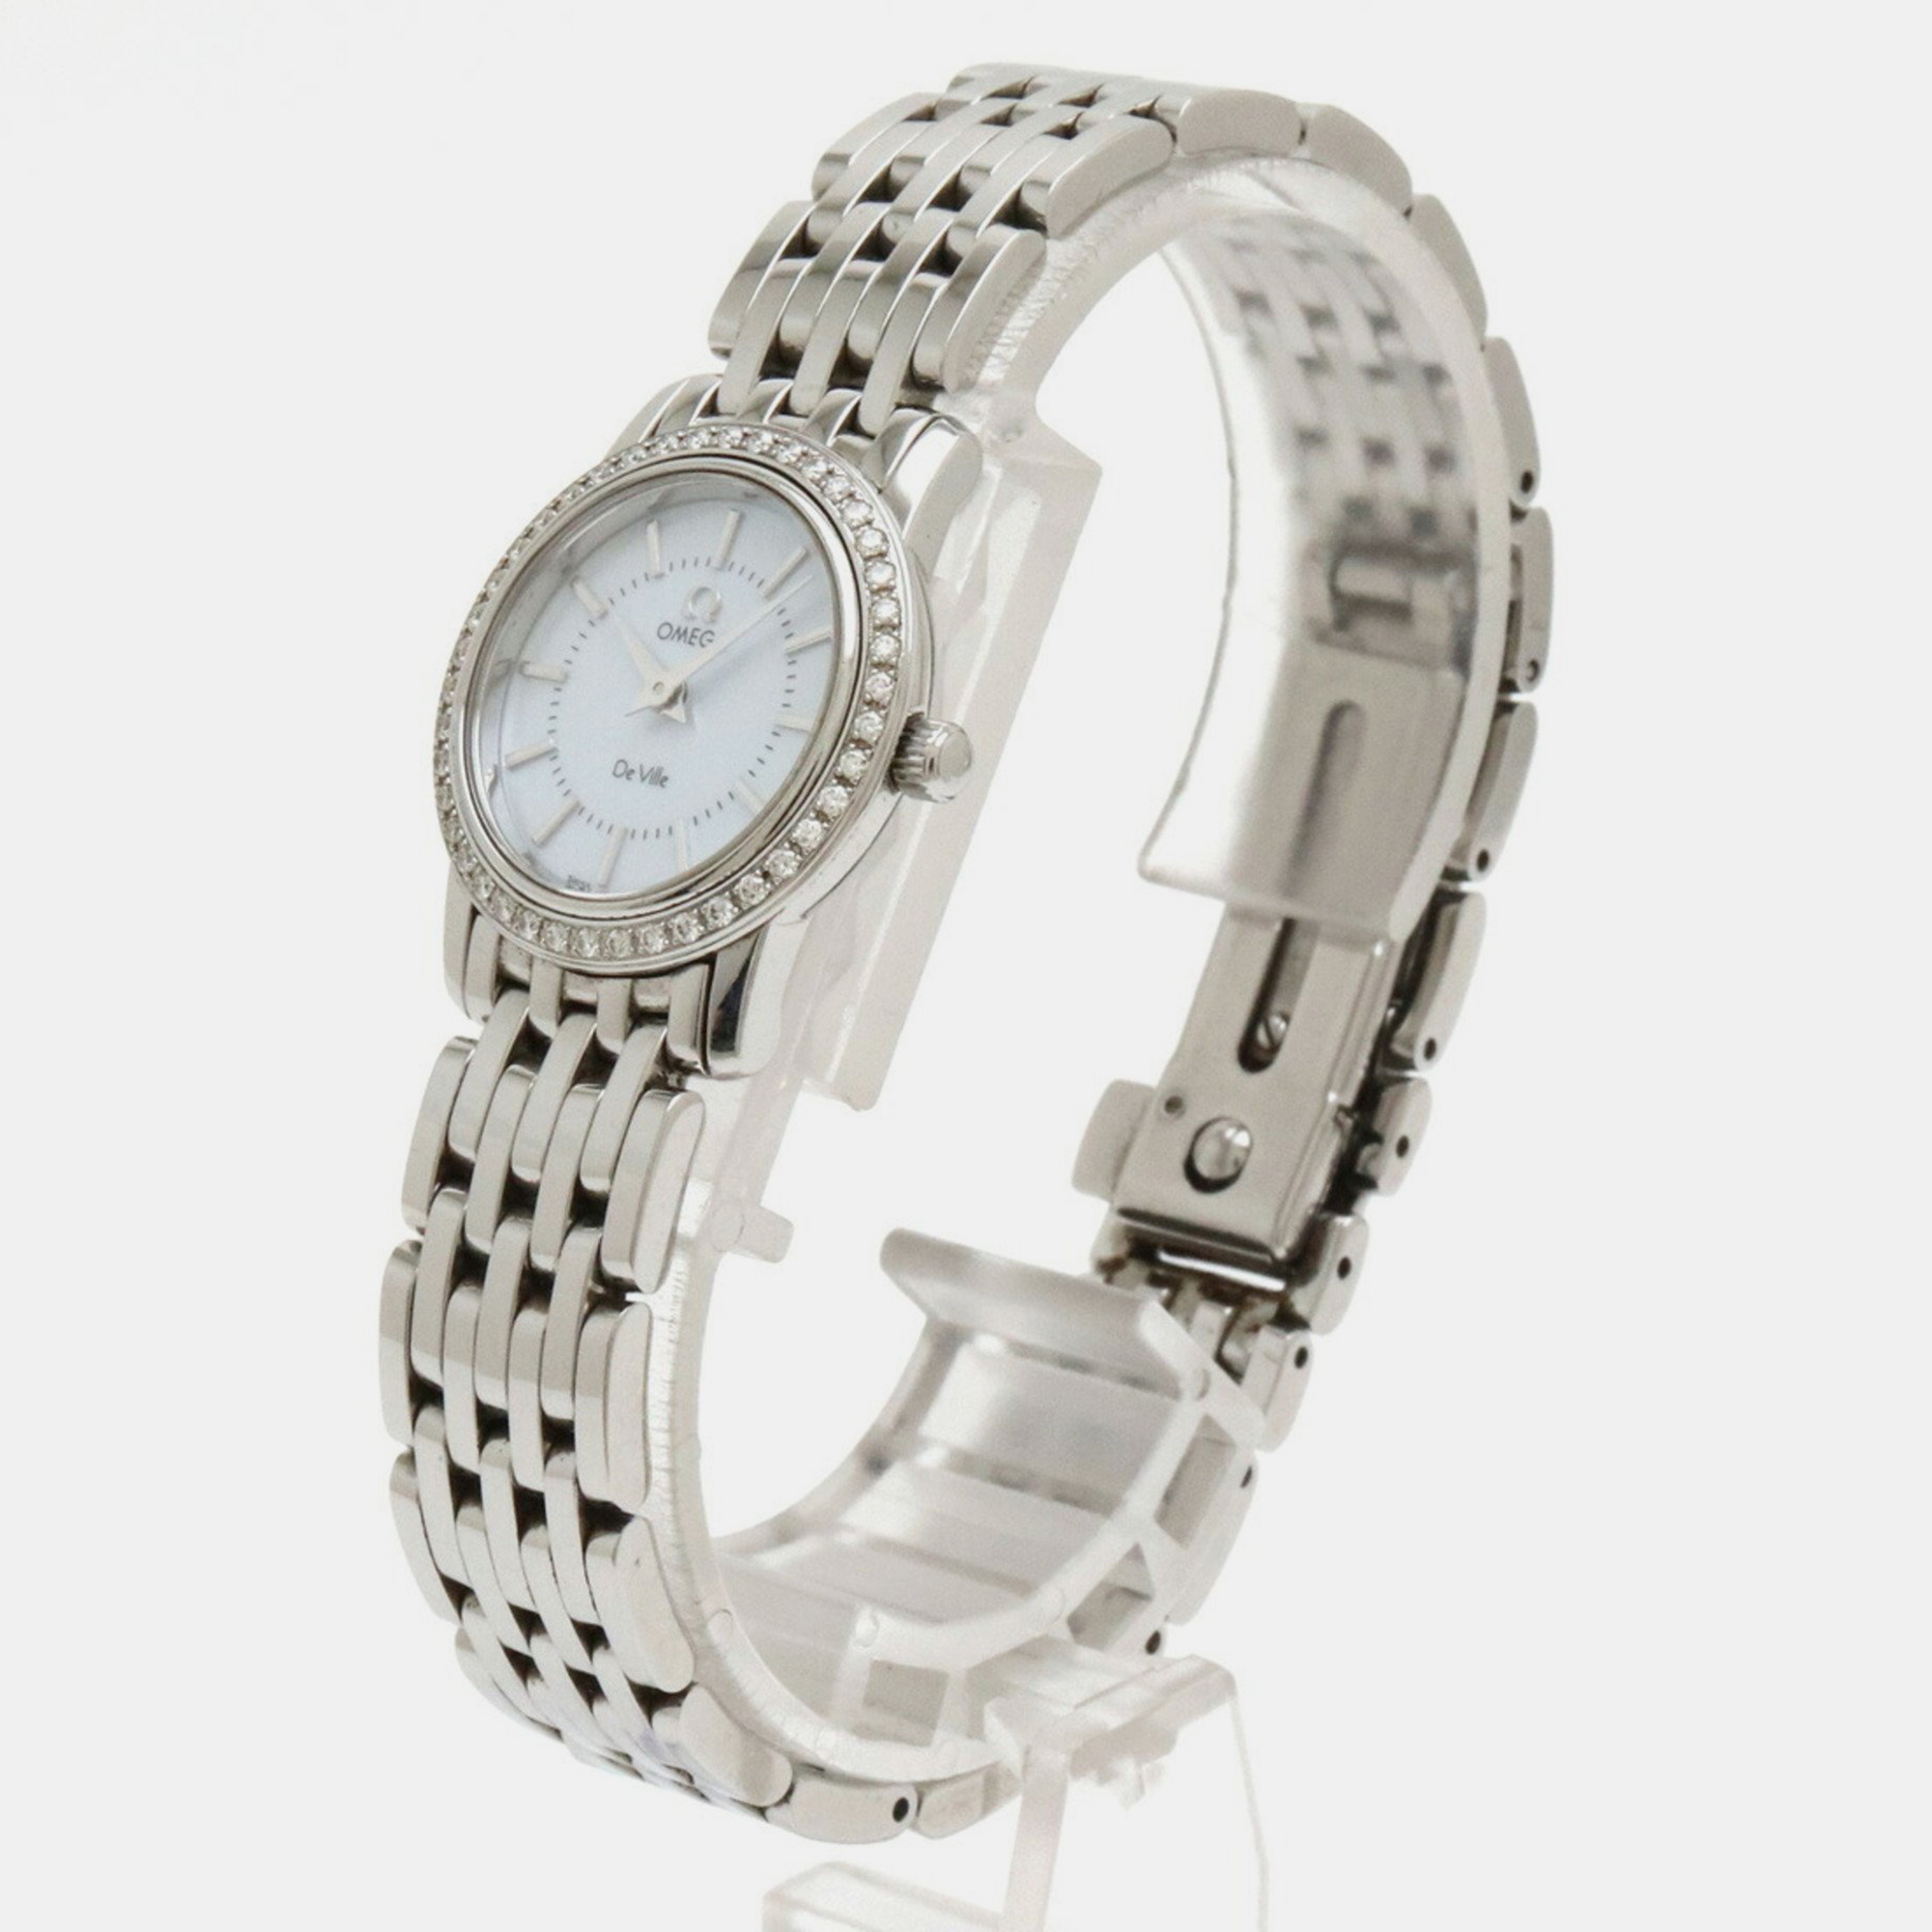 Omega Blue Shell 18k White Gold And Stainless Steel De Ville Prestige 4575.74 Quartz Women's Wristwatch 20 Mm